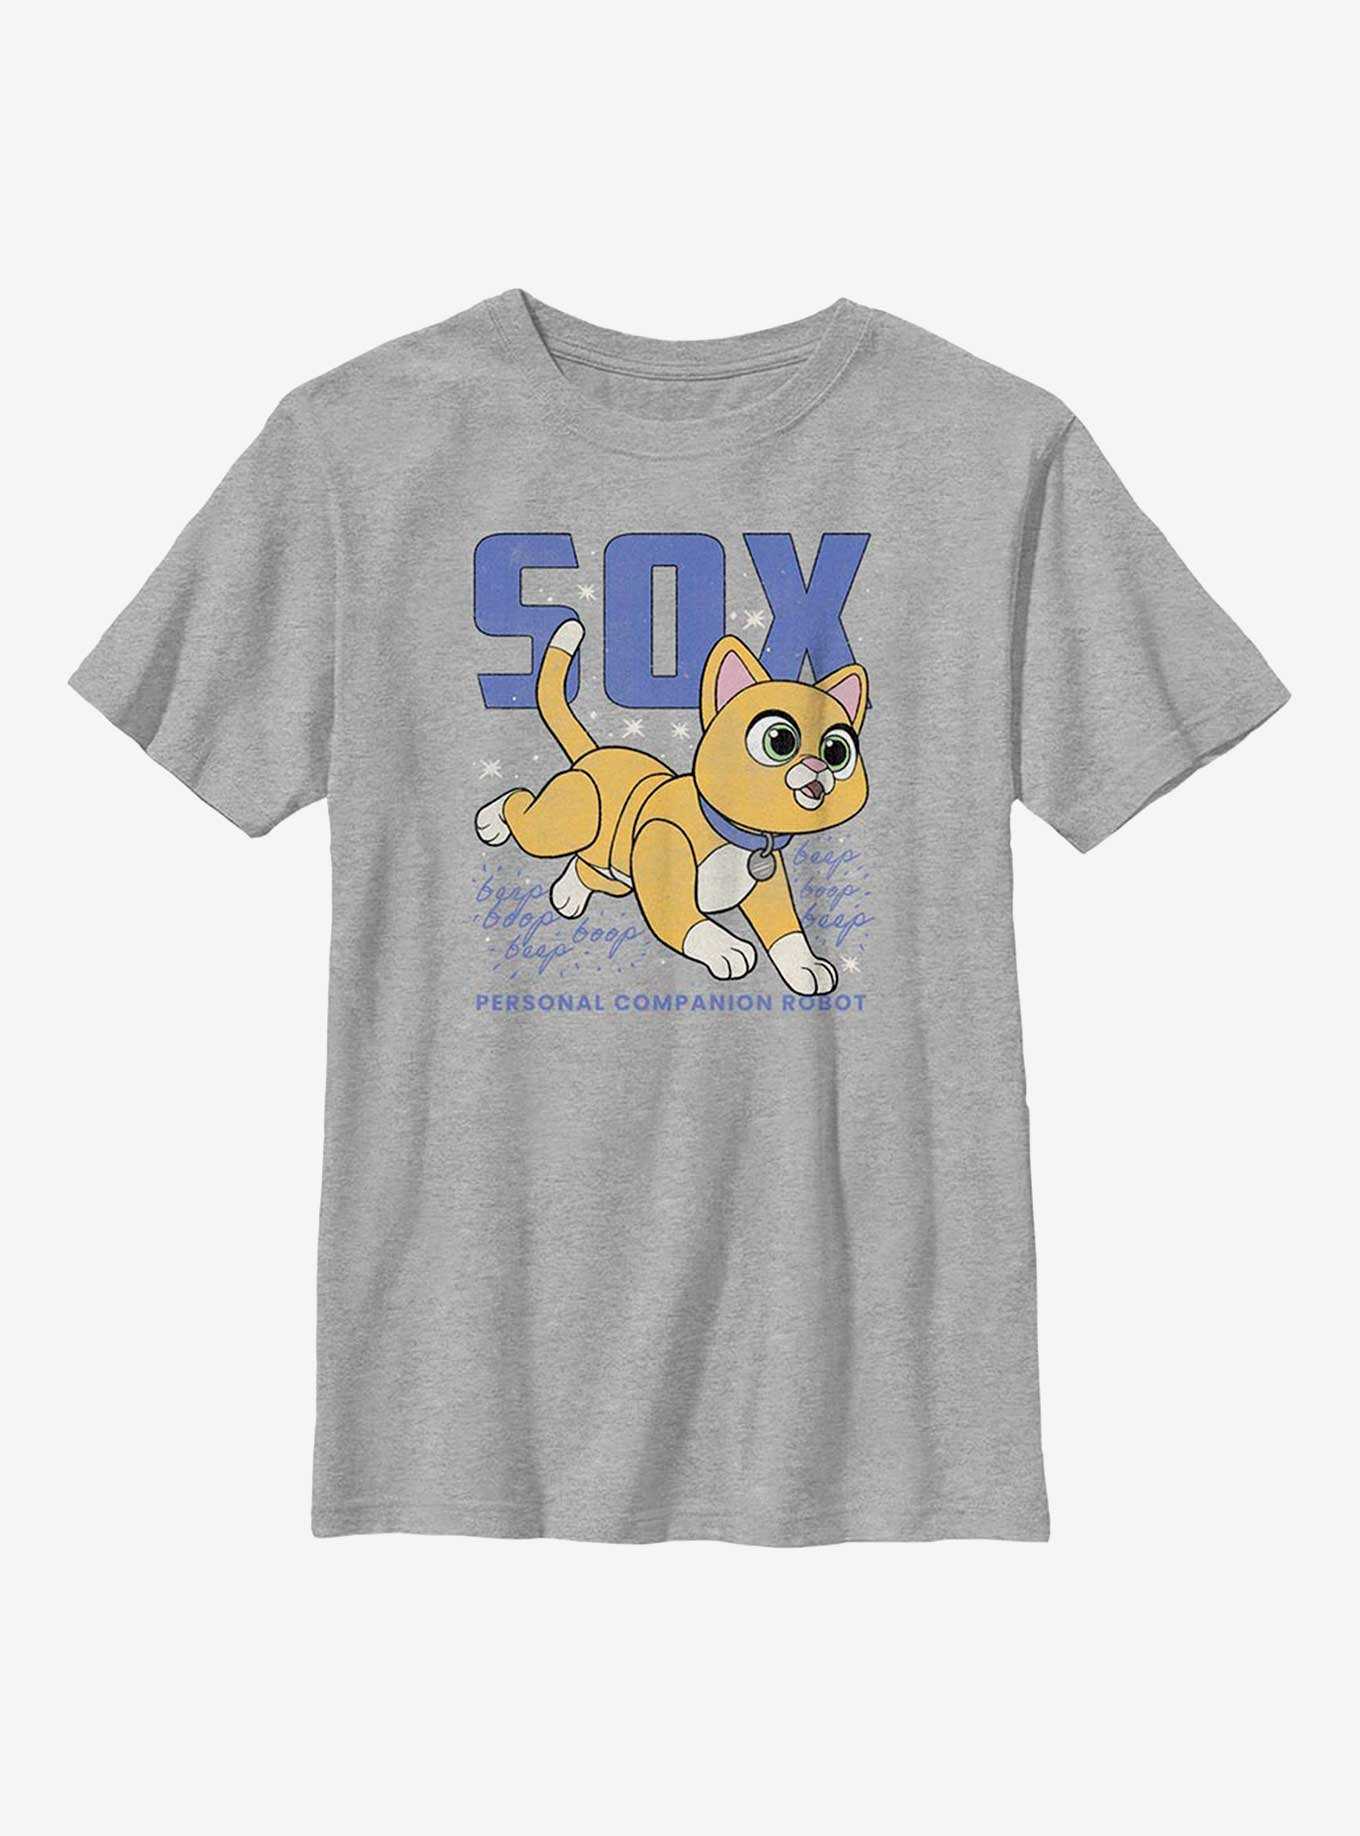 Disney Pixar Lightyear Sox Sketch Youth T-Shirt, , hi-res